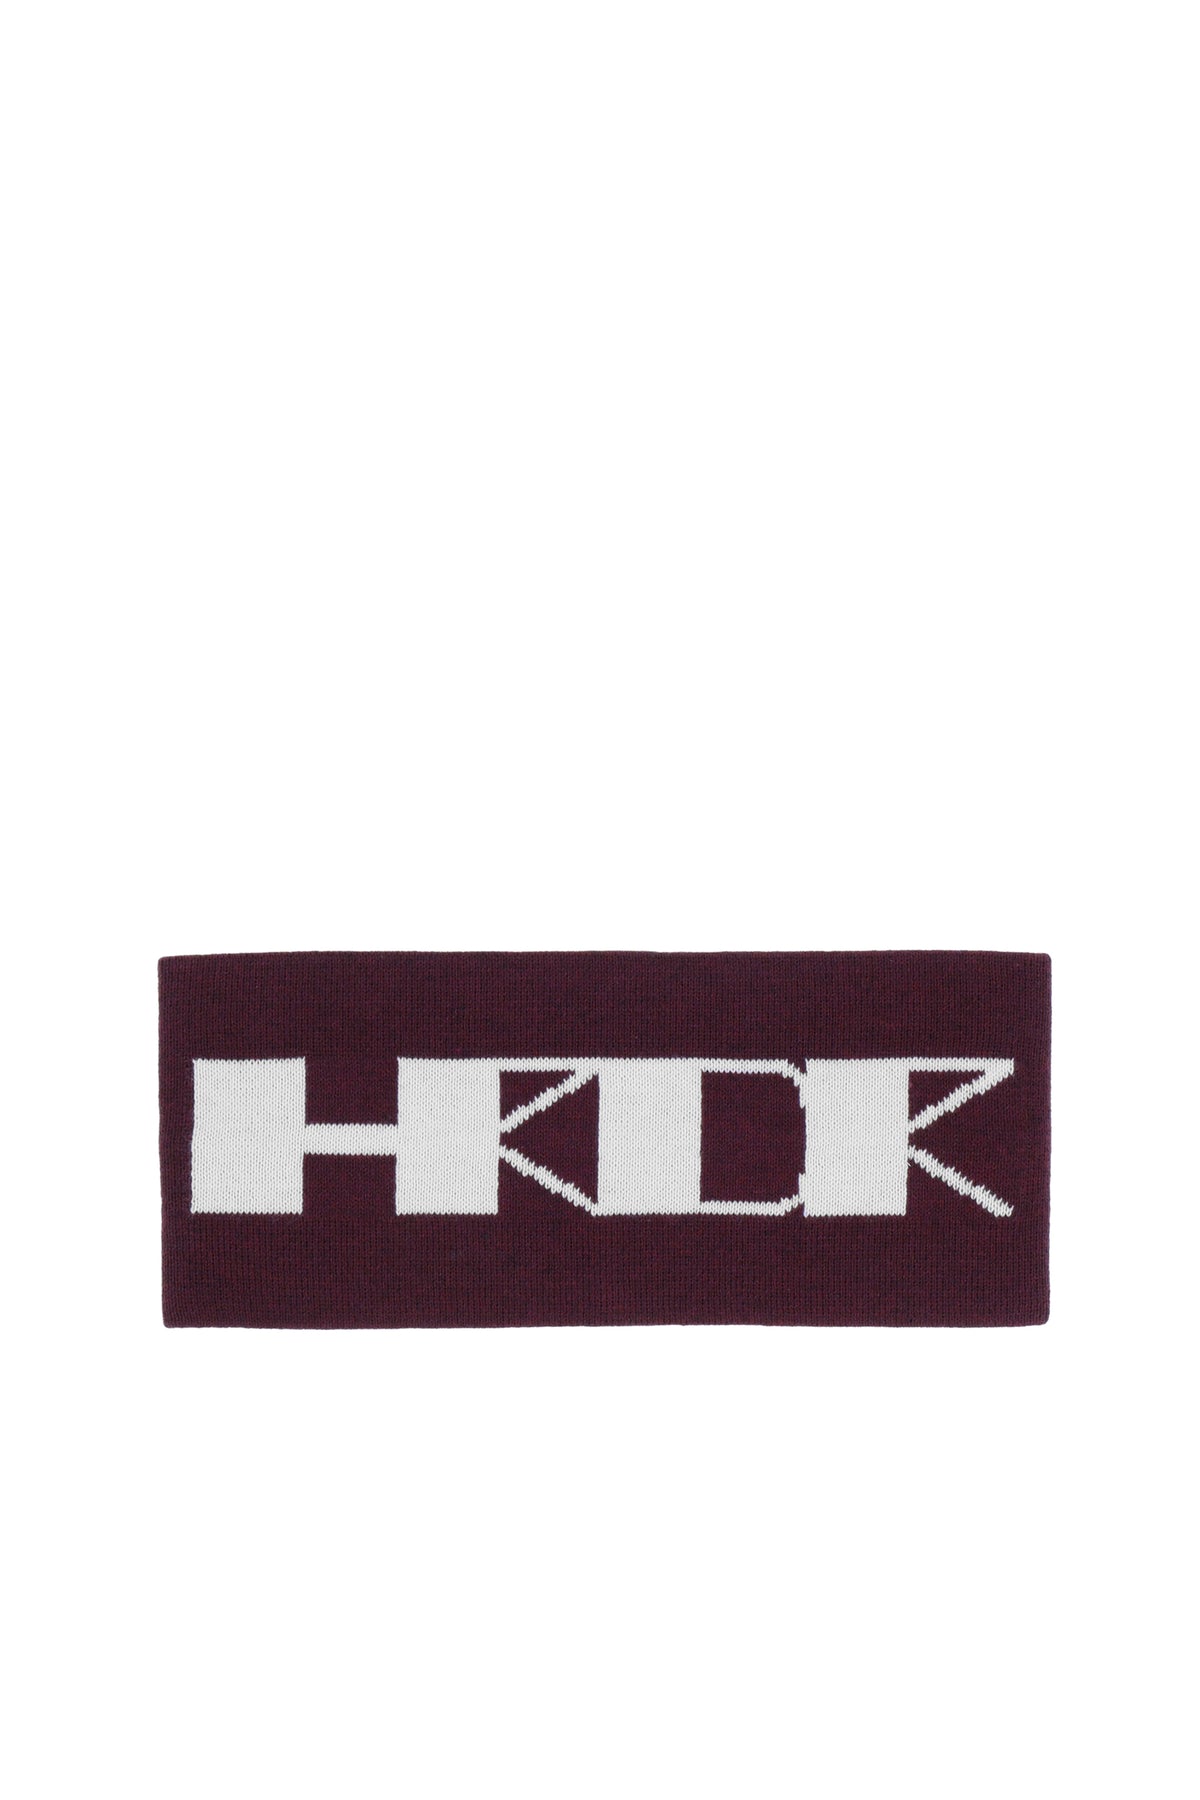 HRDR HEADBAND / MAUVE MILK